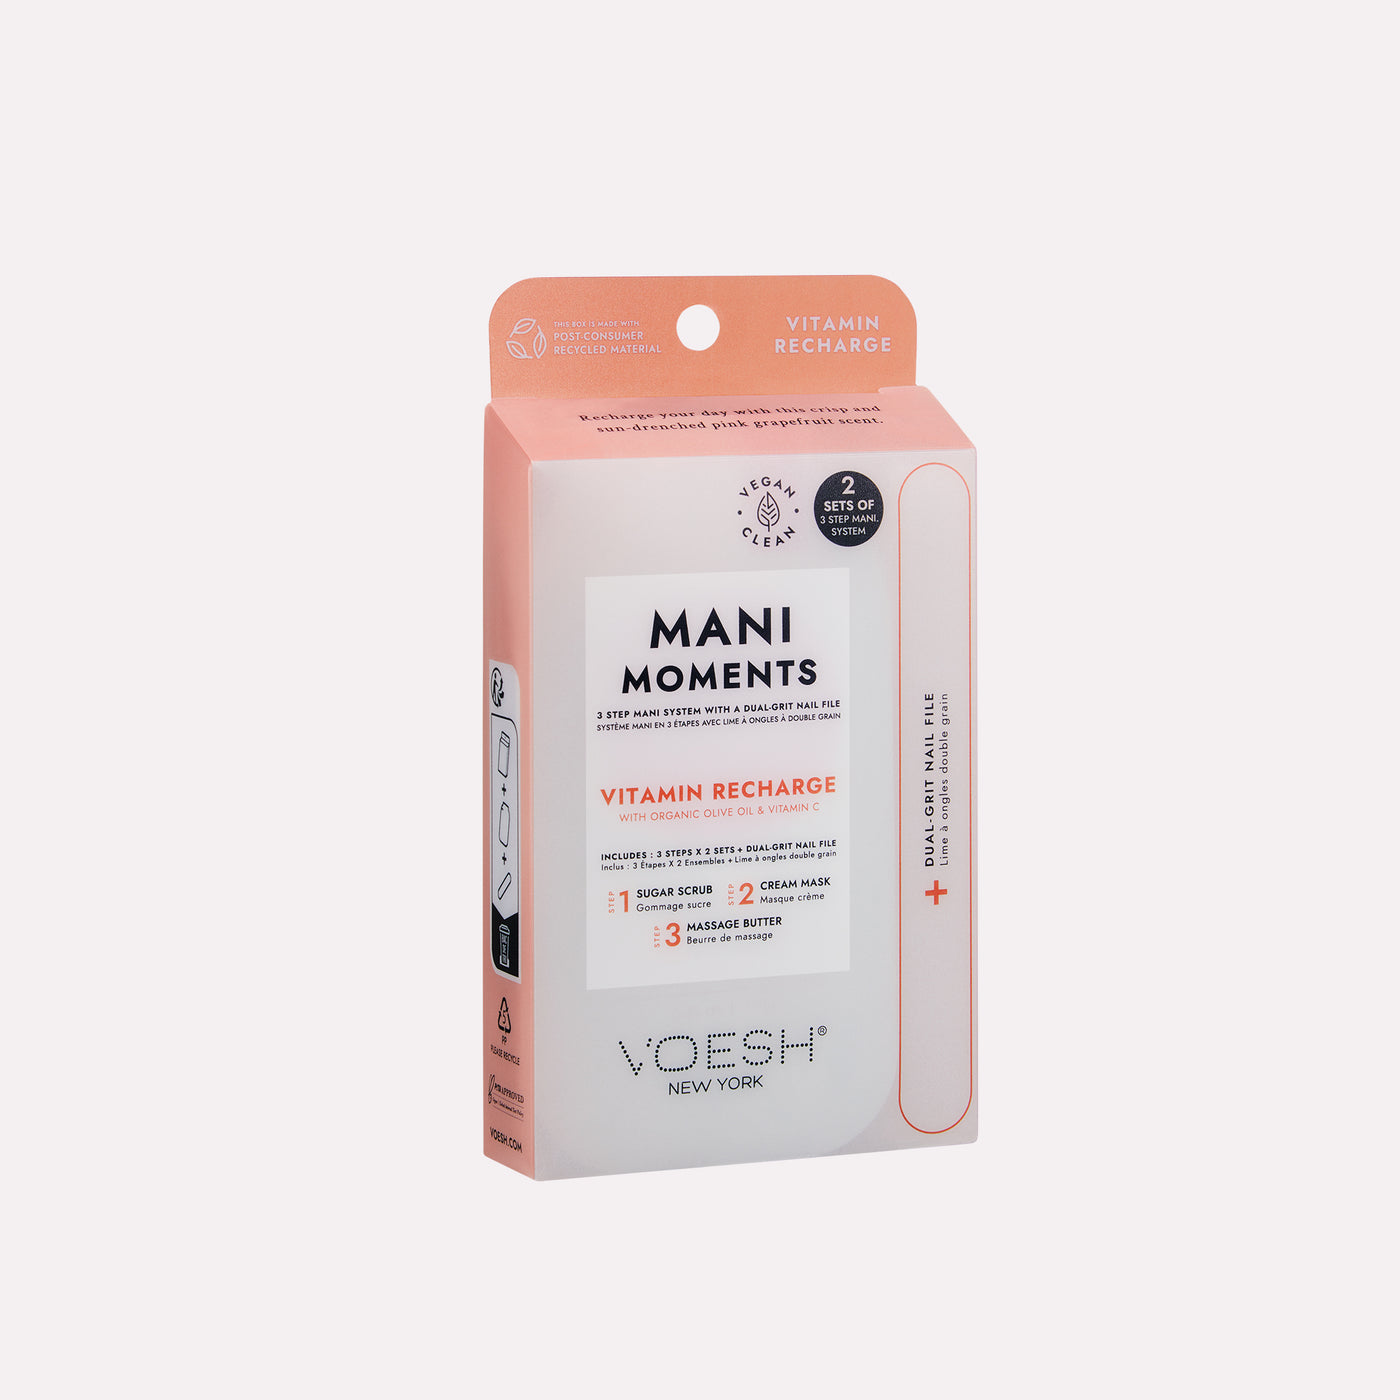 Mani Moments - Vitamin Recharge